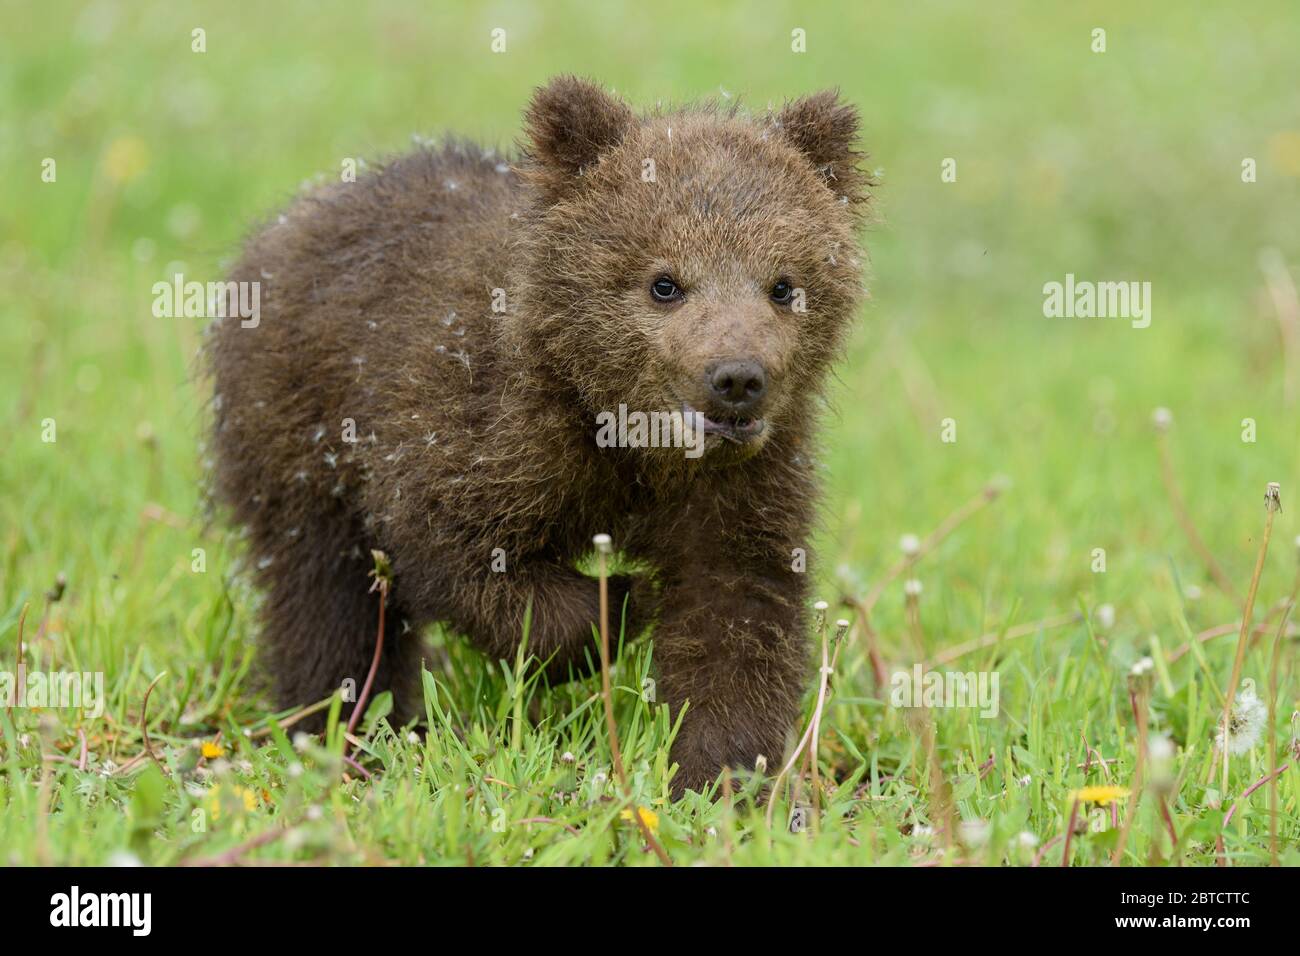 Bear cub in spring grass. Dangerous small animal in nature meadow habitat. Wildlife scene Stock Photo